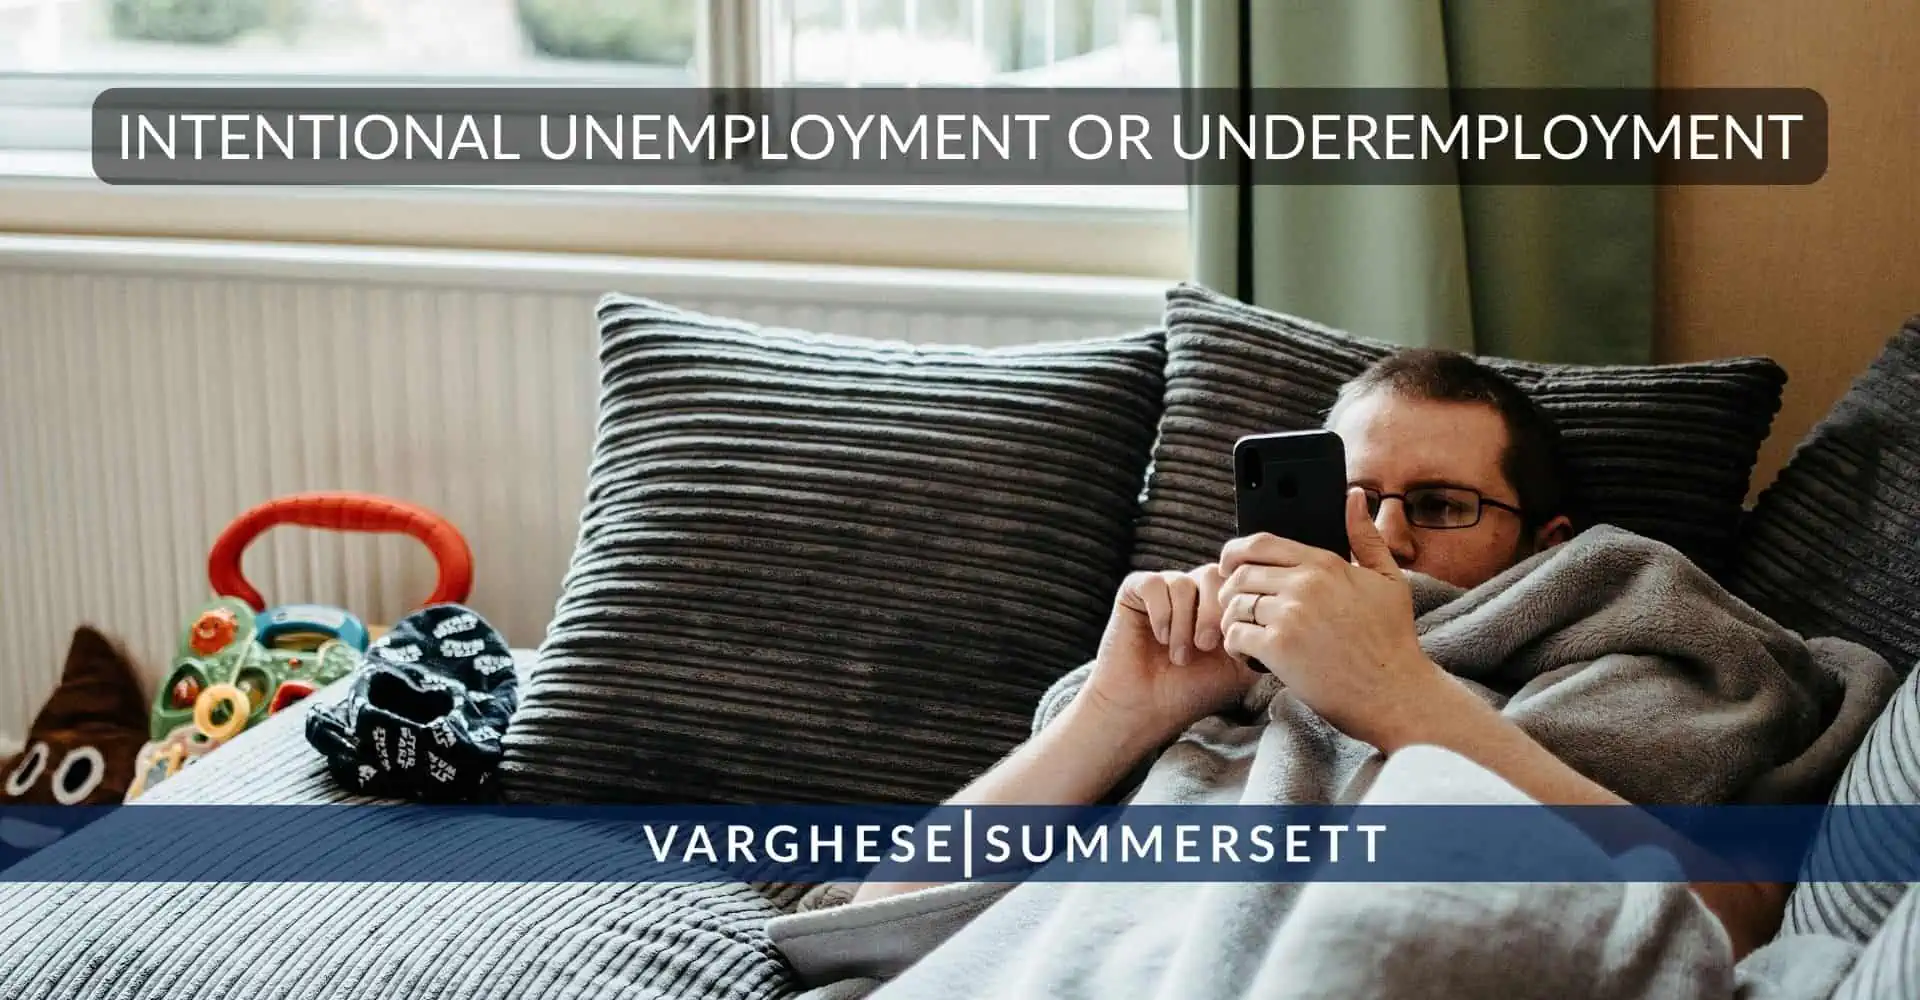 Desempleo o subempleo intencionados